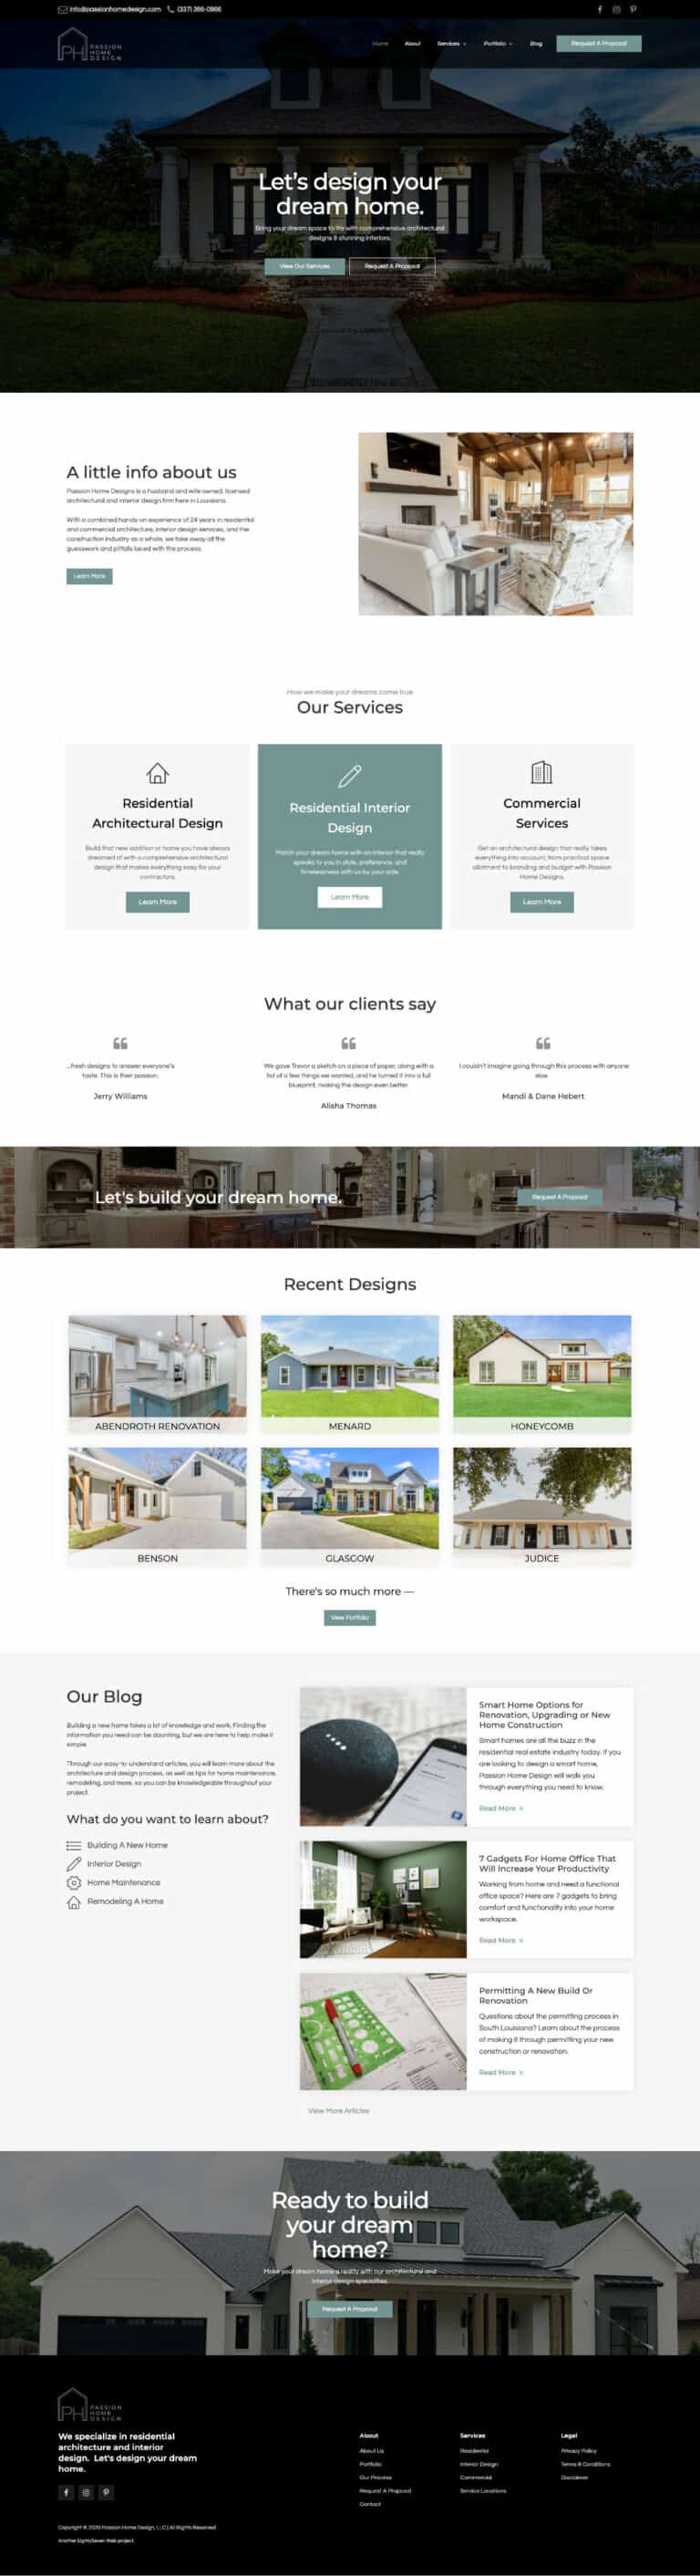 Screenshot of Passion Home Design website.